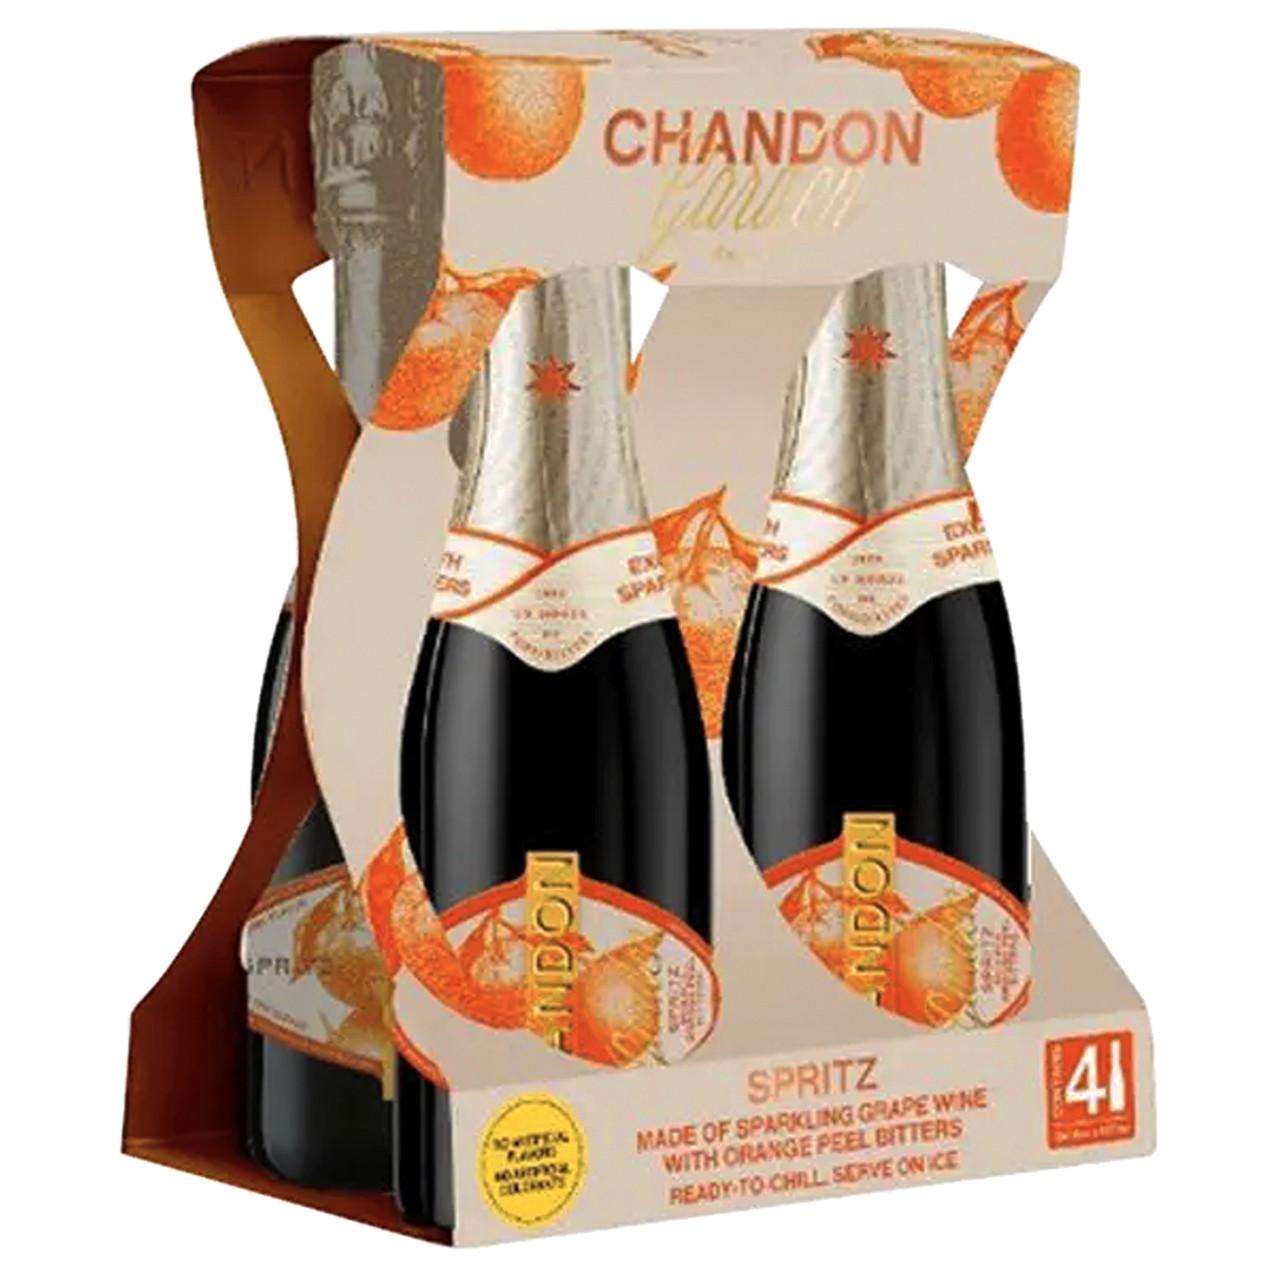 Buy Chandon Garden Spritz 4PK® Online